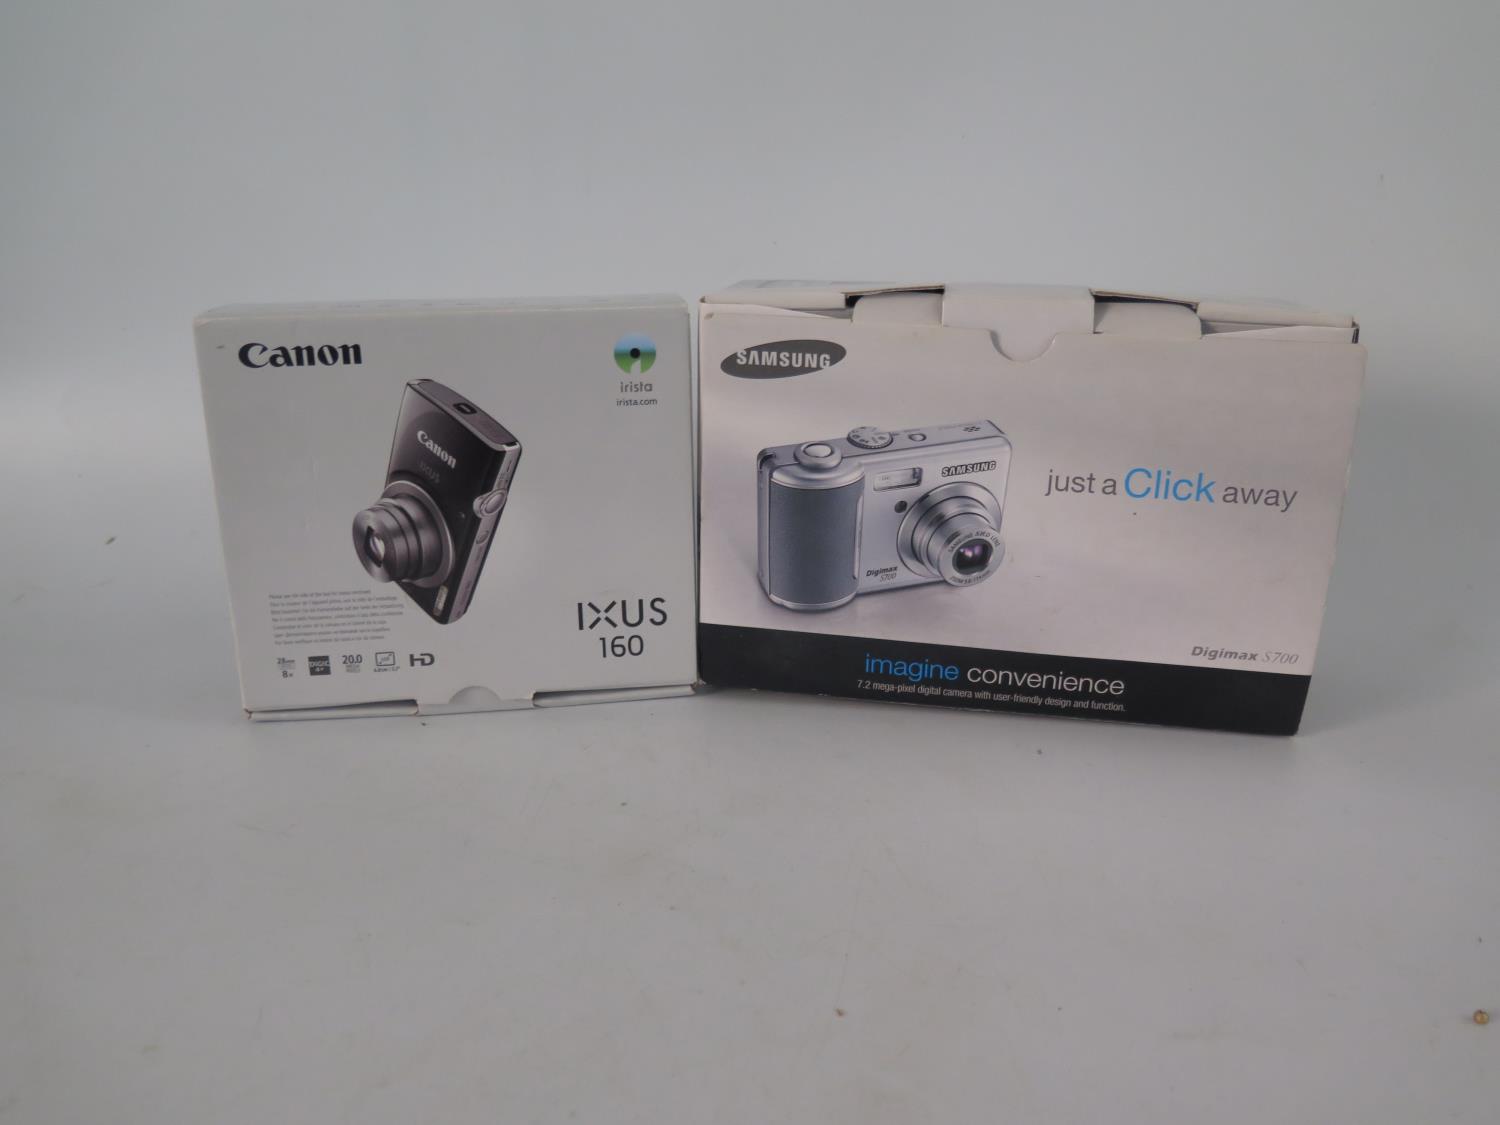 Canon Ixus 160 & A Samsung Digimax S700 Digital Cameras, Both Boxed.